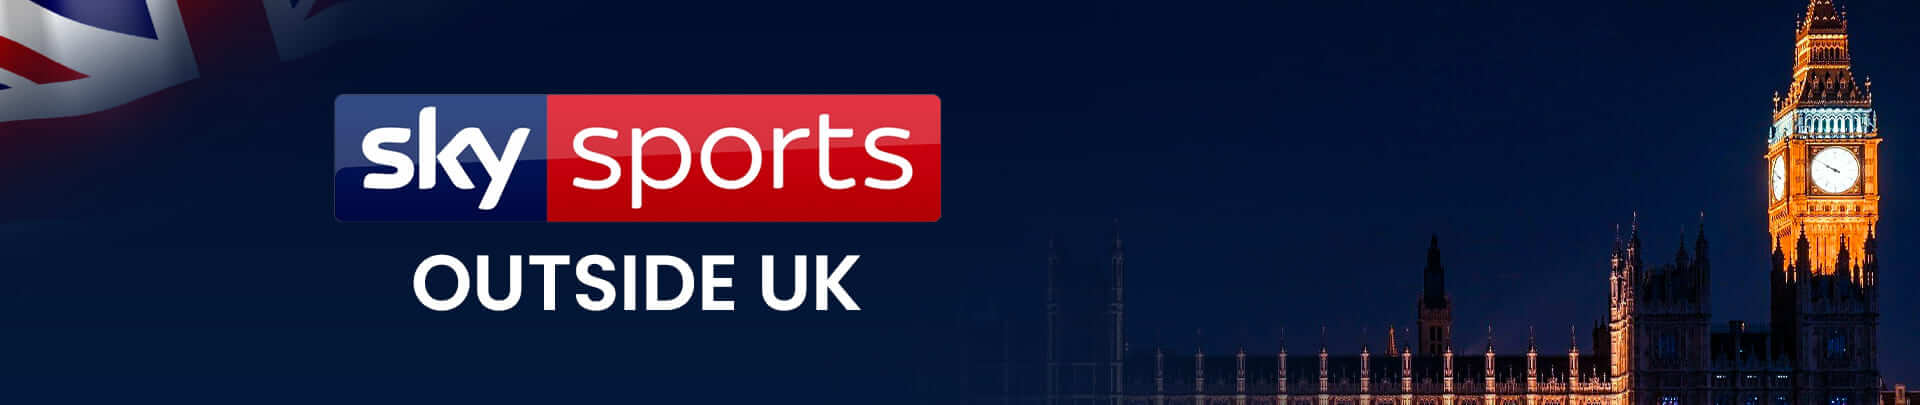 Sky Sports outside UK